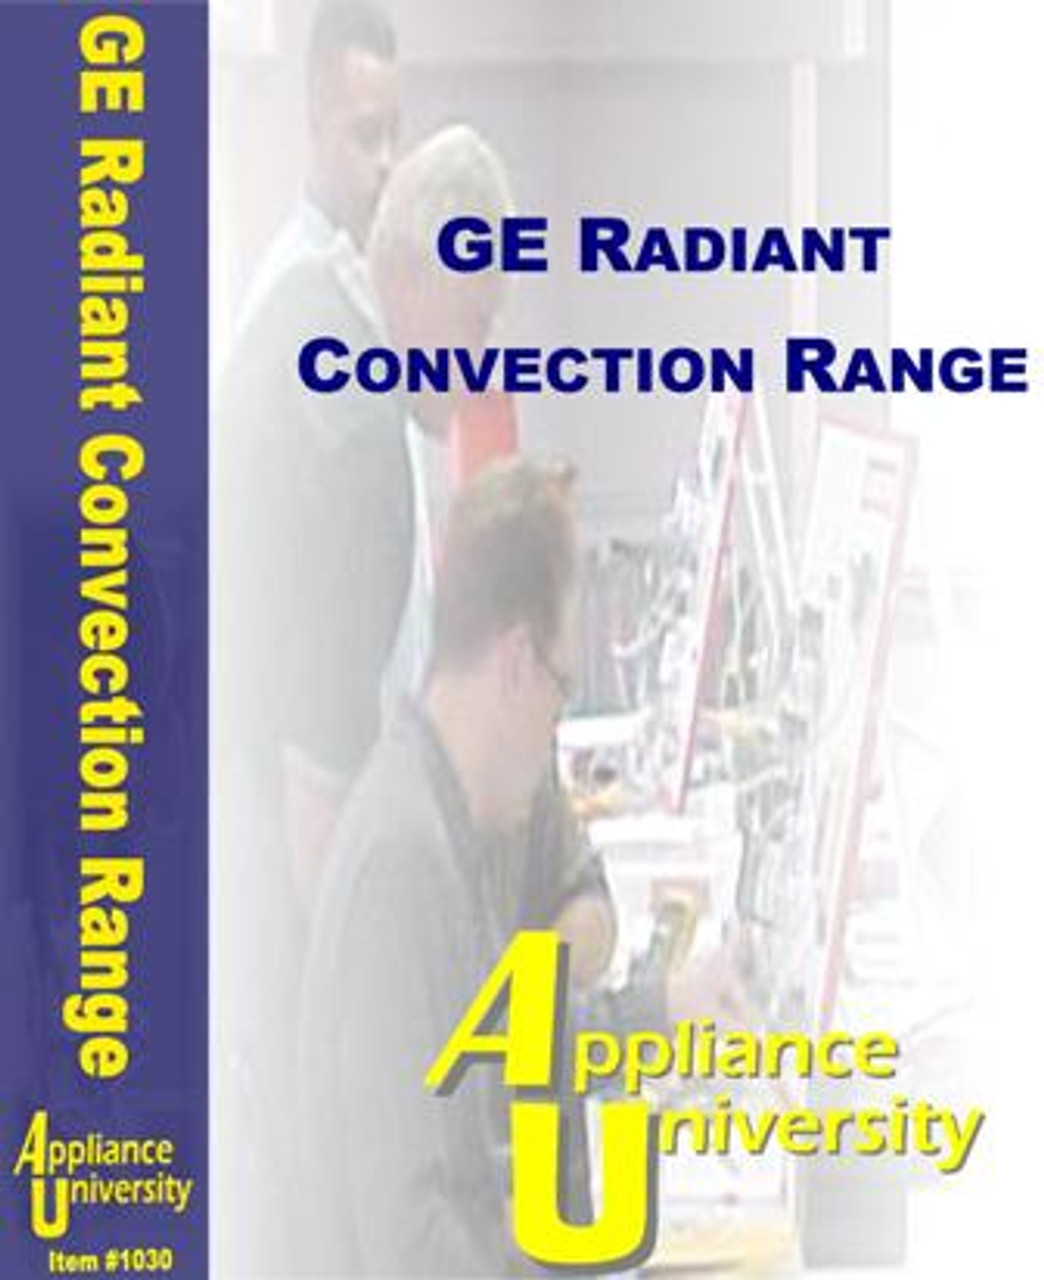 Repairing GE Radiant Convection Range-Tutorial